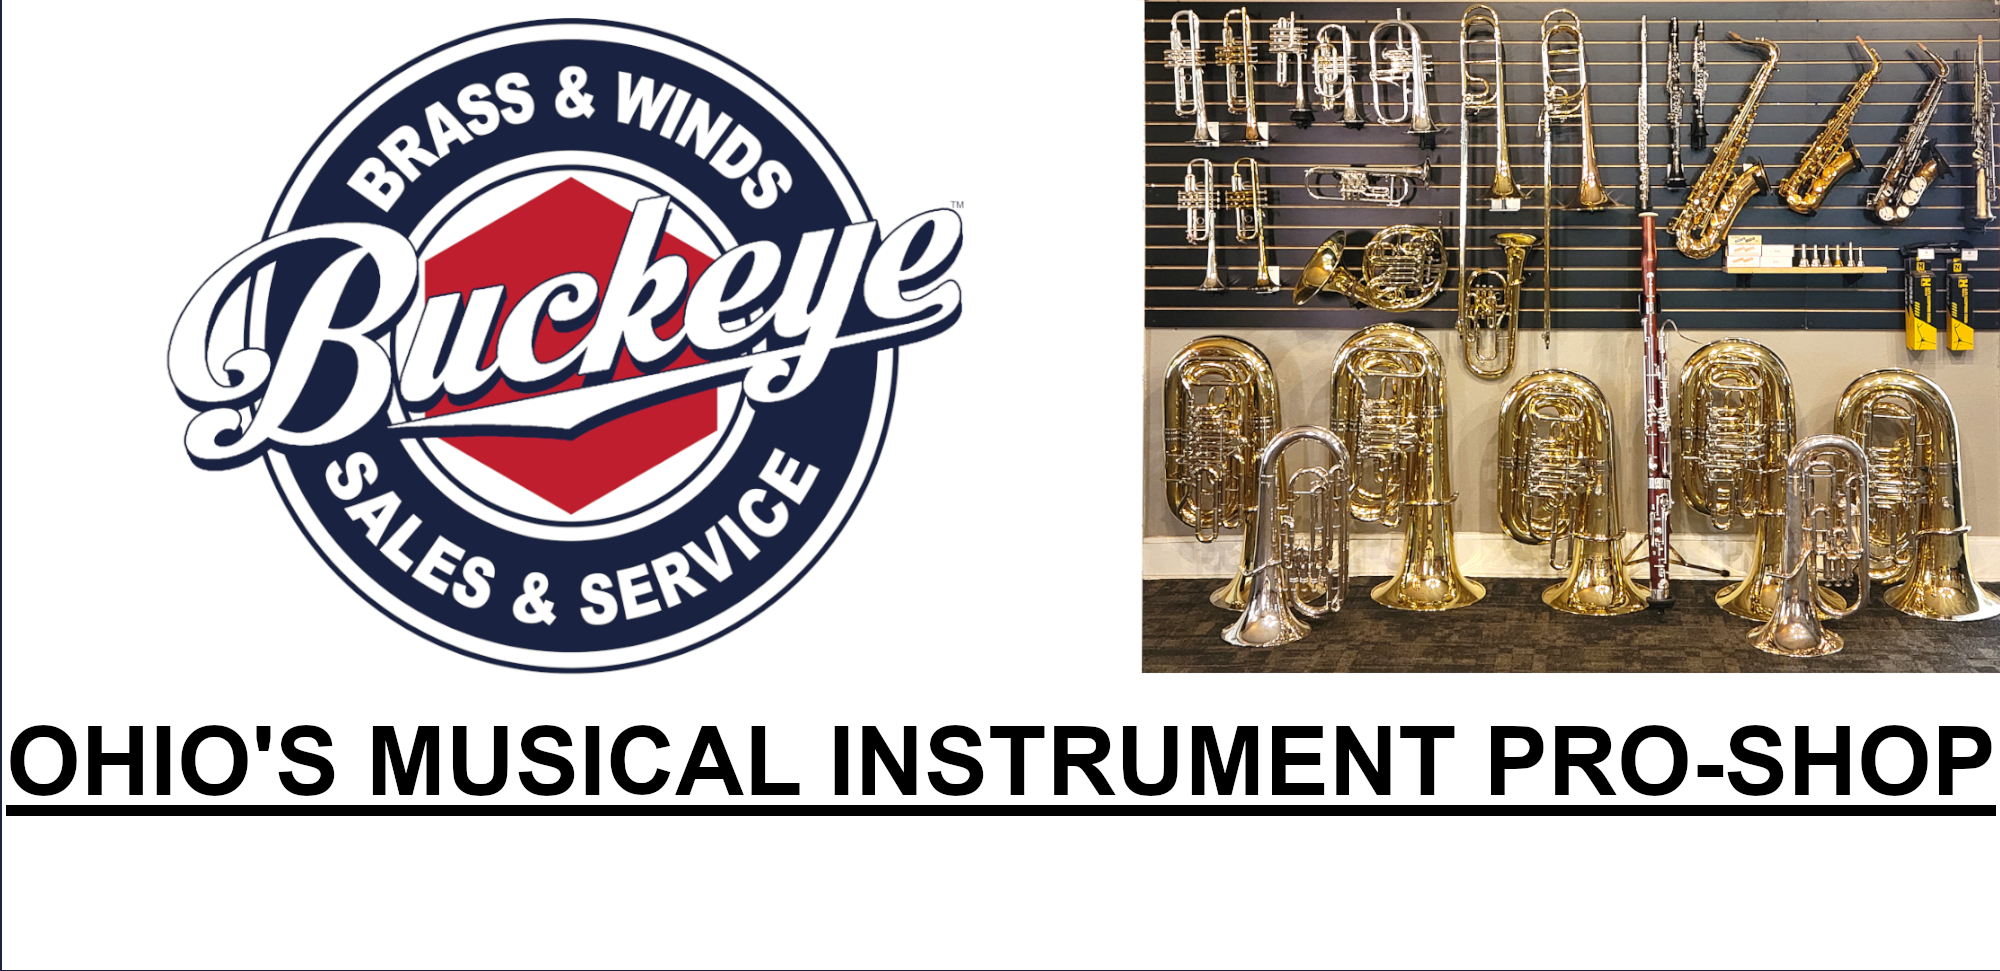 Buckeye Brass and Winds